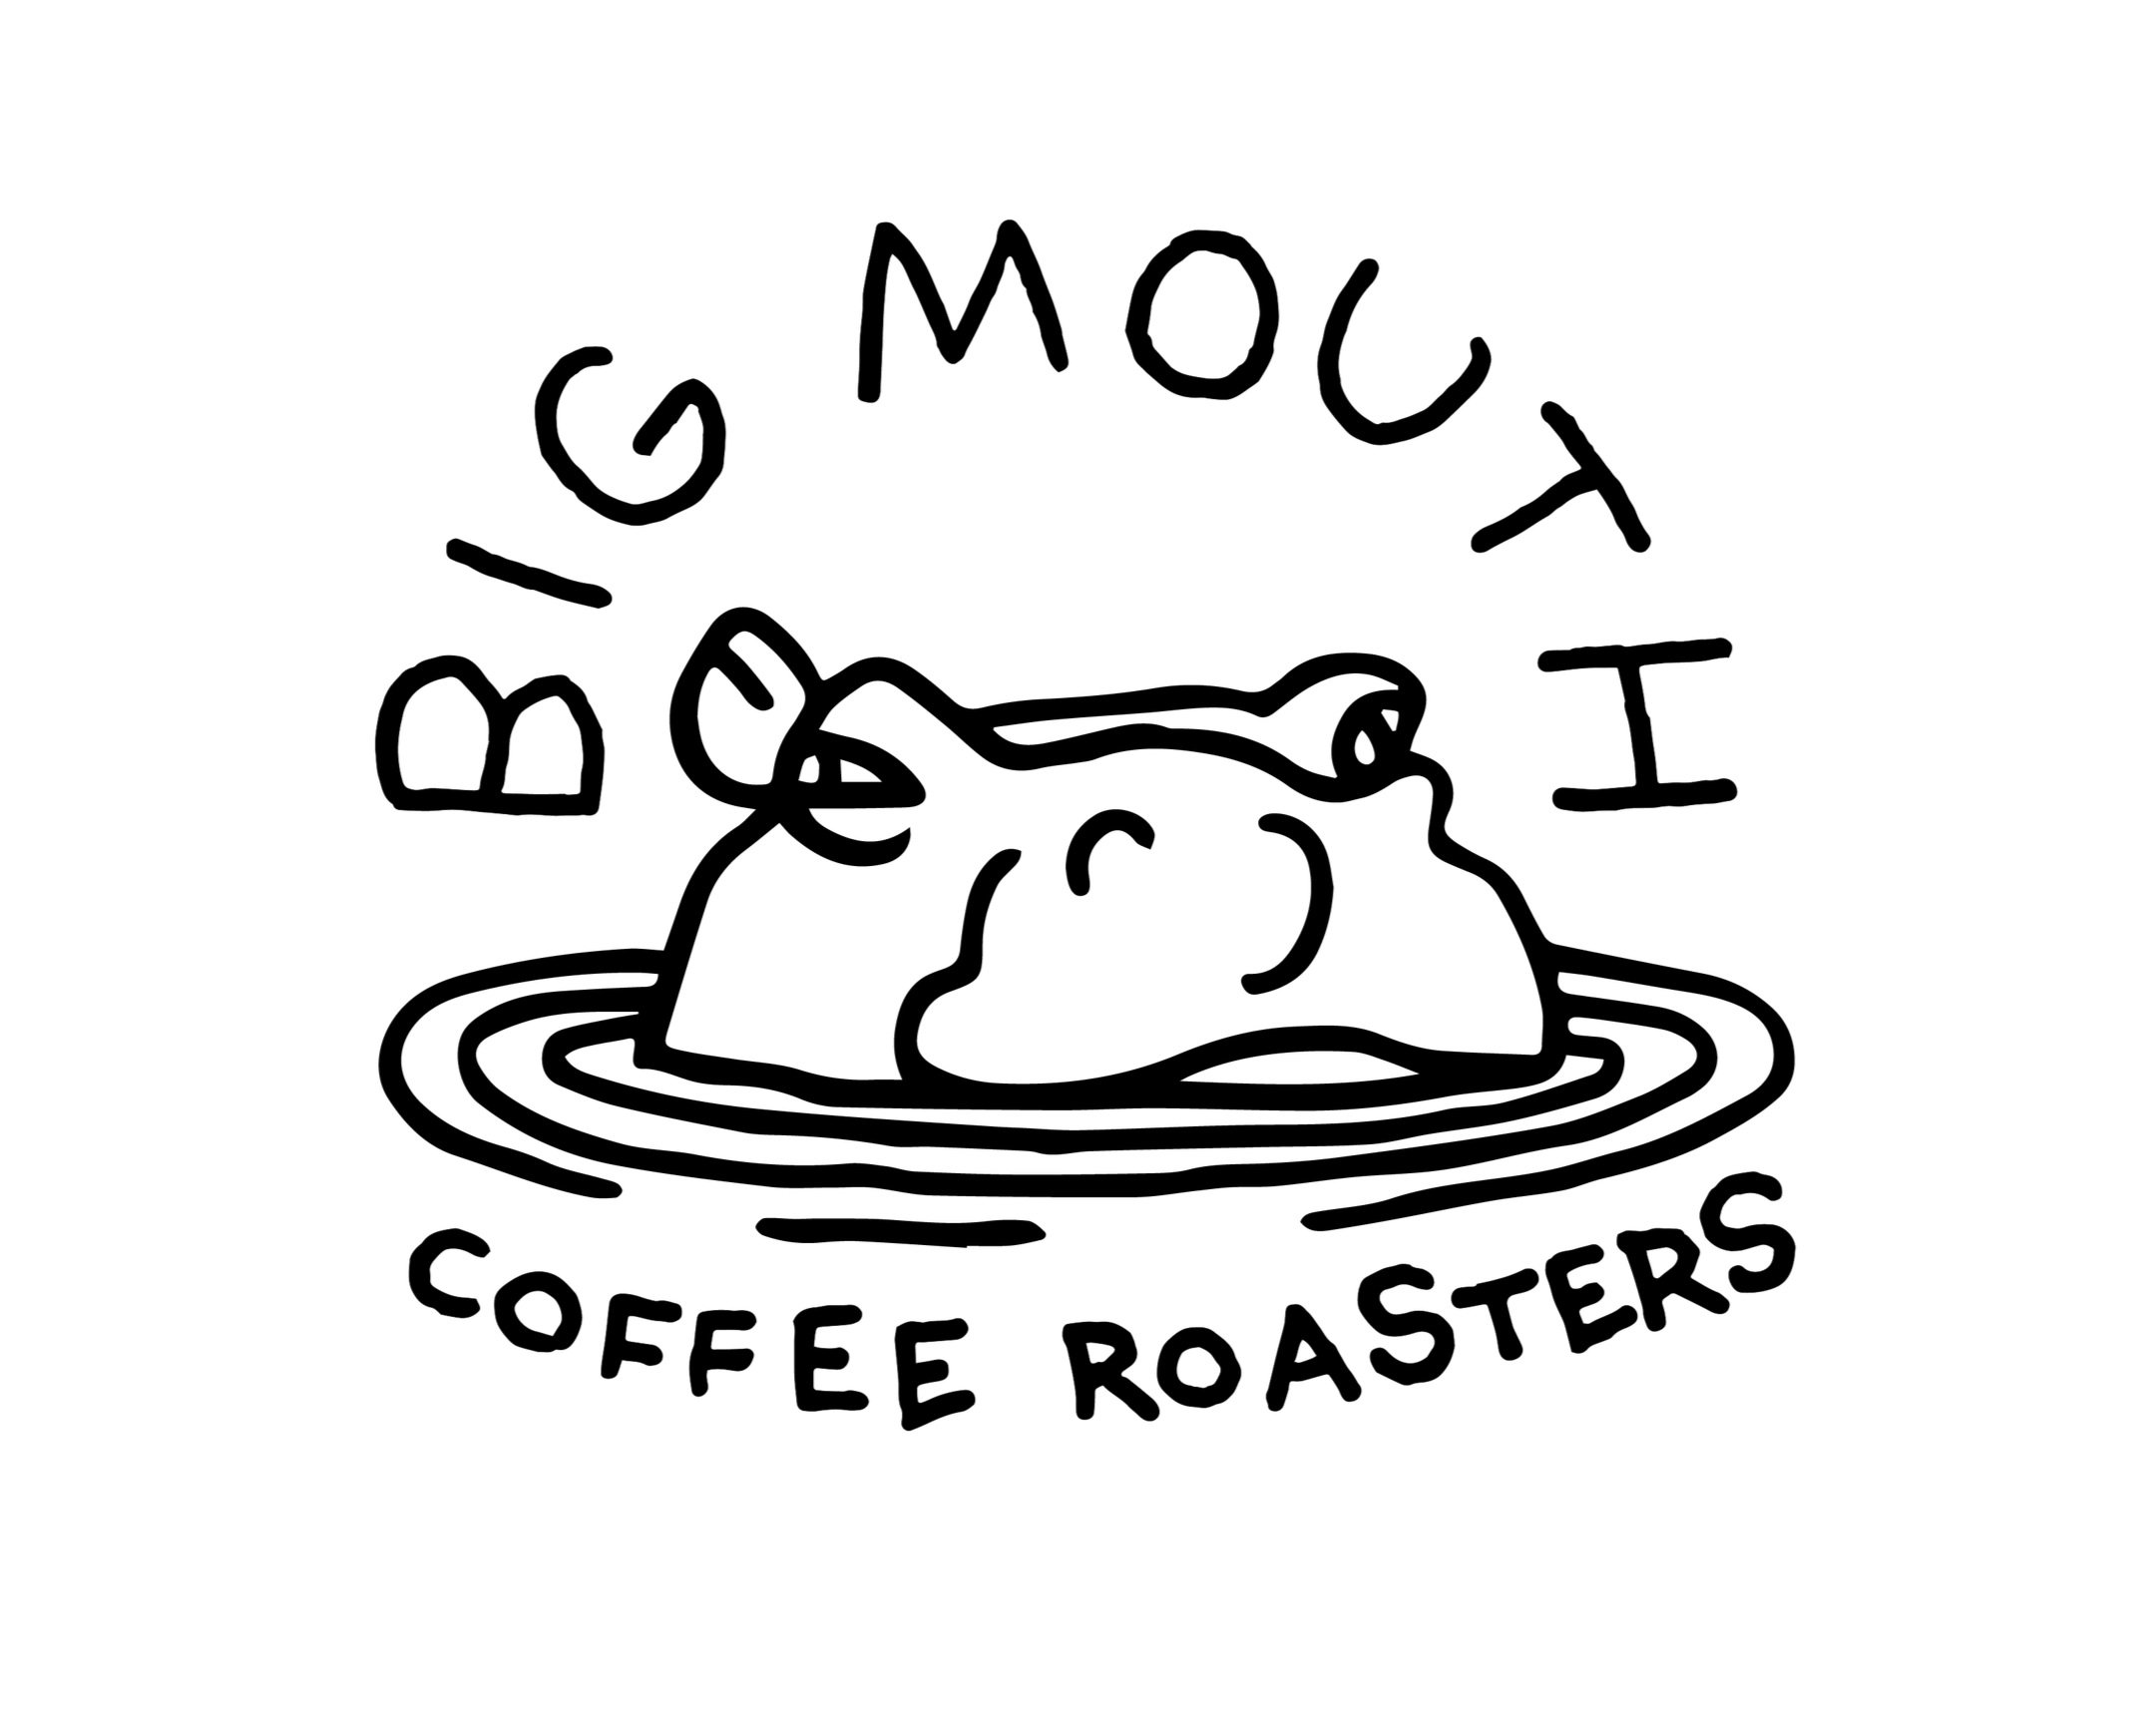 BIG MOUTH COFFEE ROASTERS